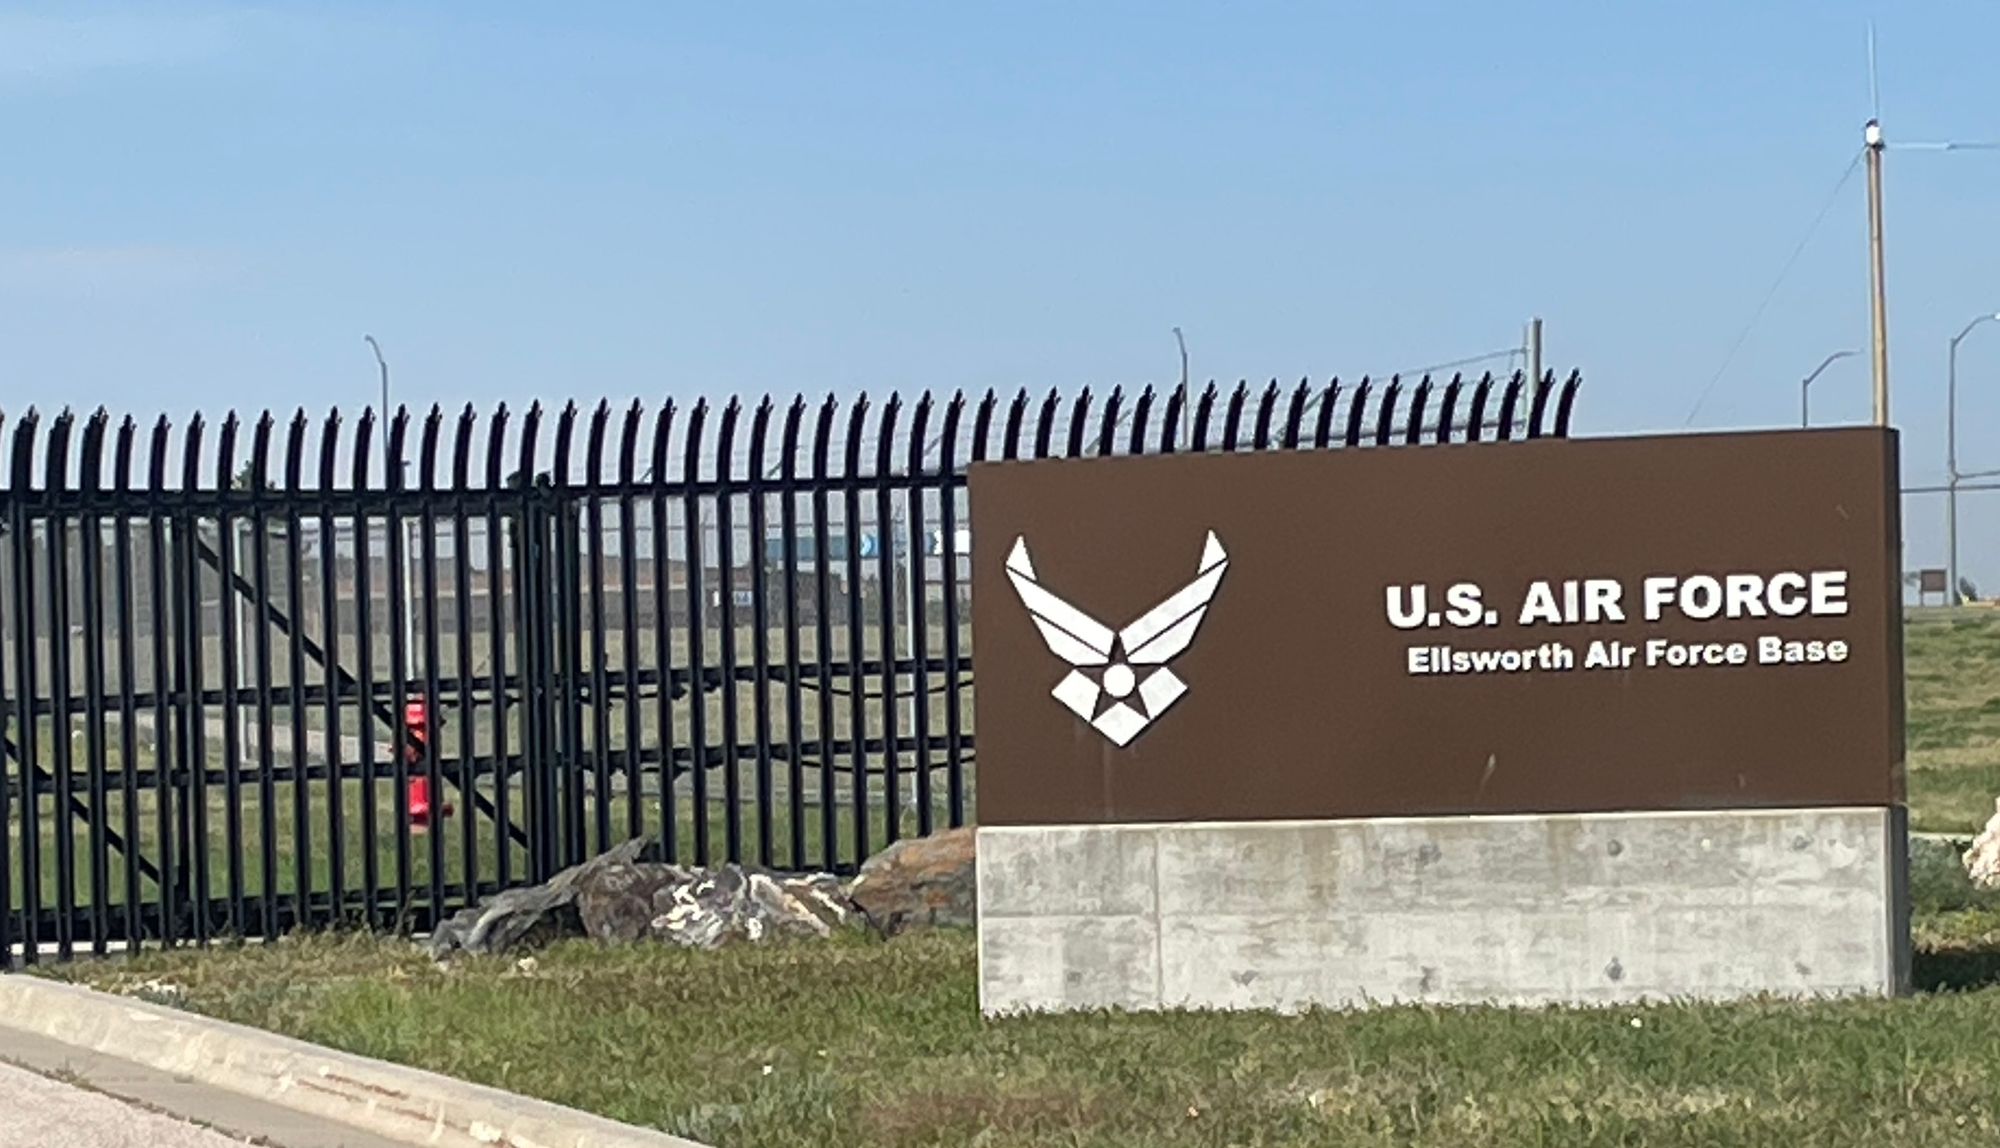 Sign at Ellsworth Air Force Base